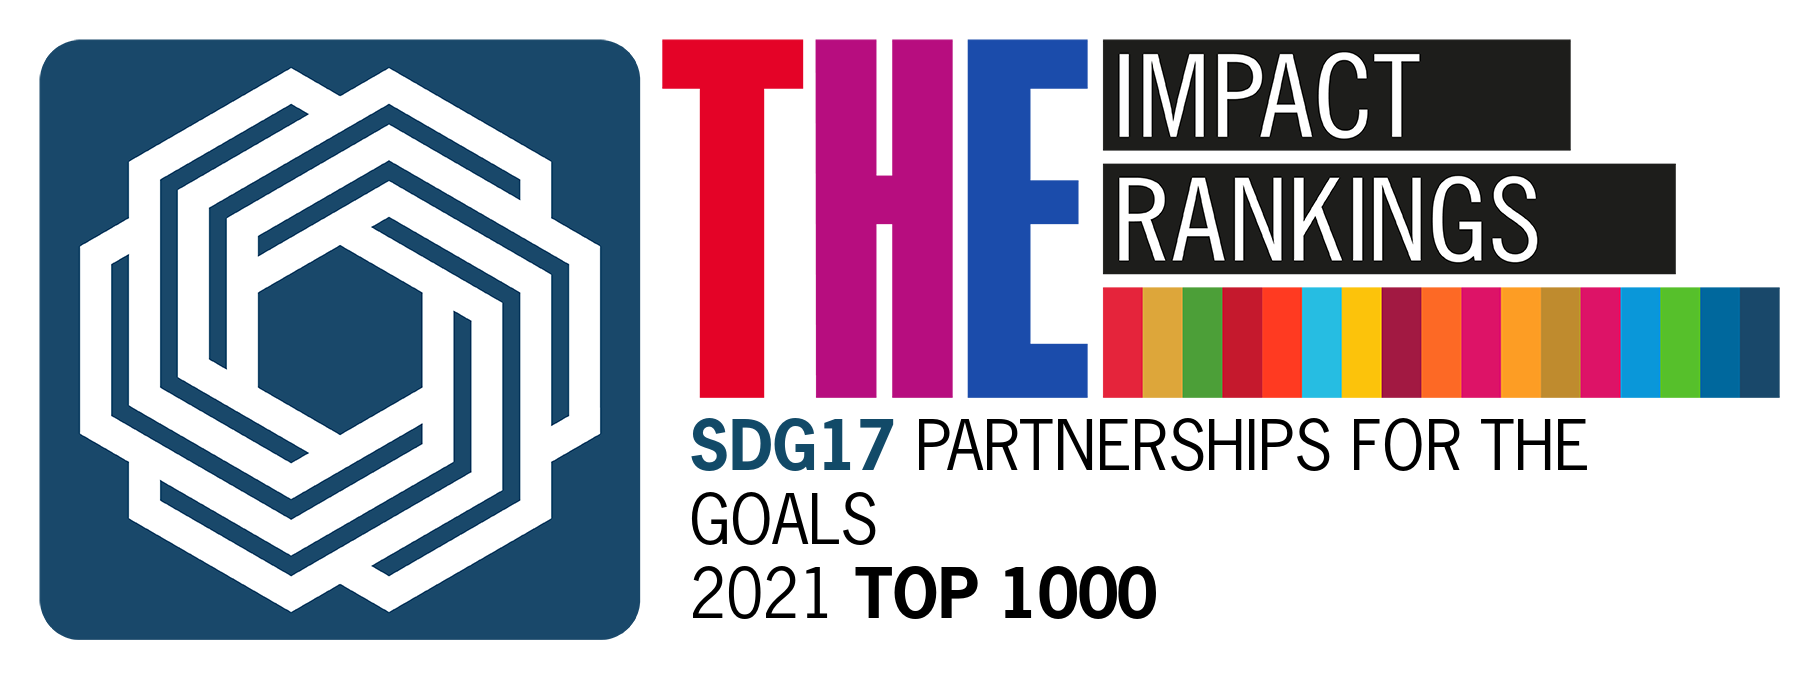 SDG17_ Partnerships for the Goals - Top 1000